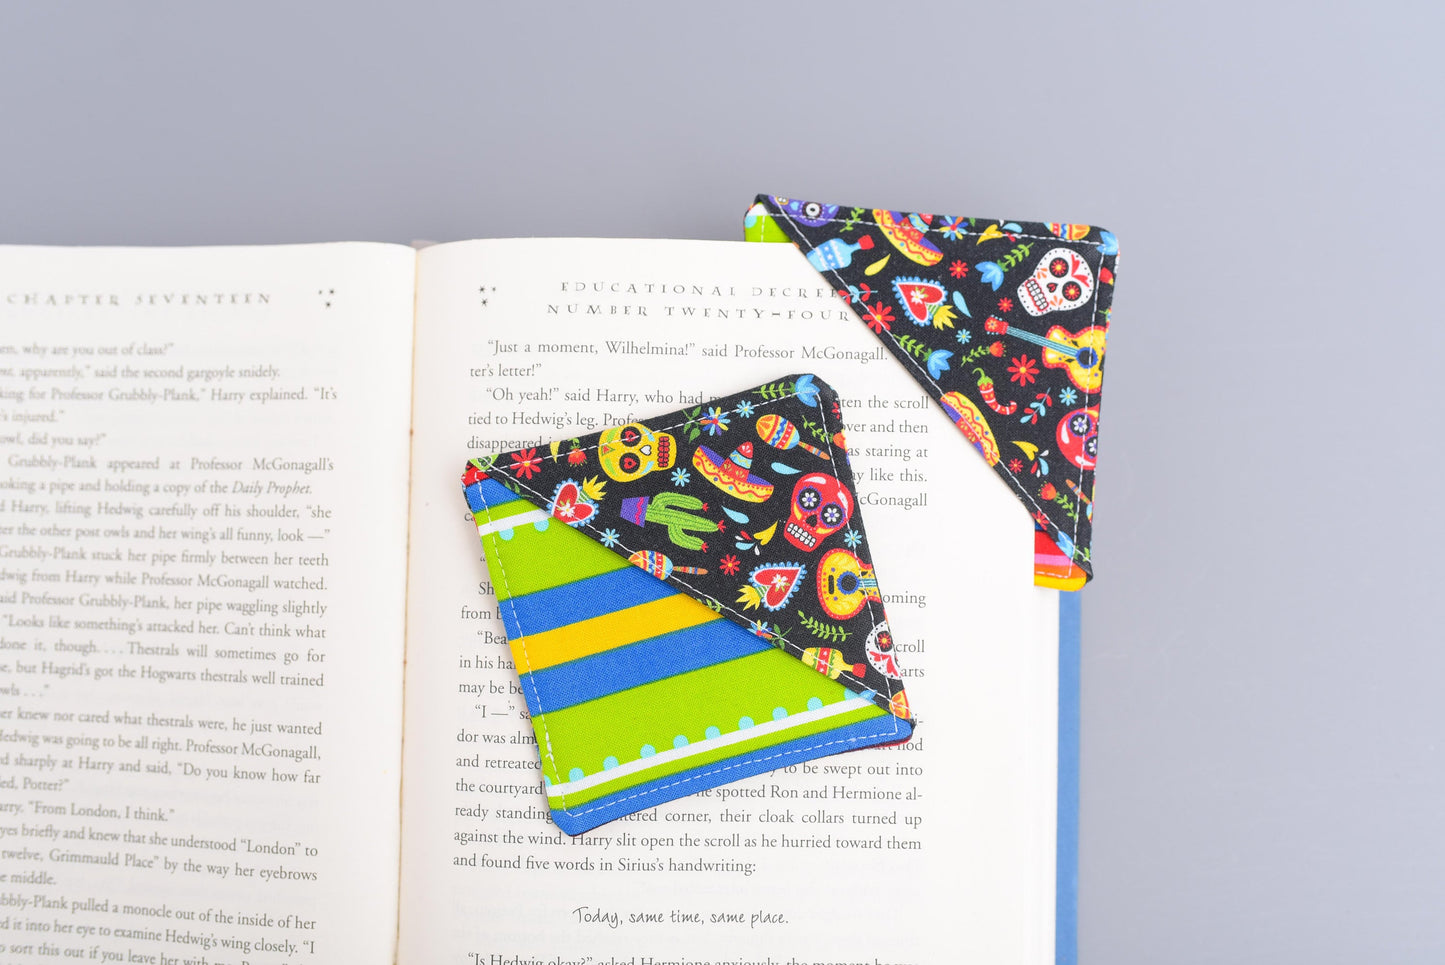 Day of the Dead & Colorful Stripe Handmade Fabric Corner Bookmark